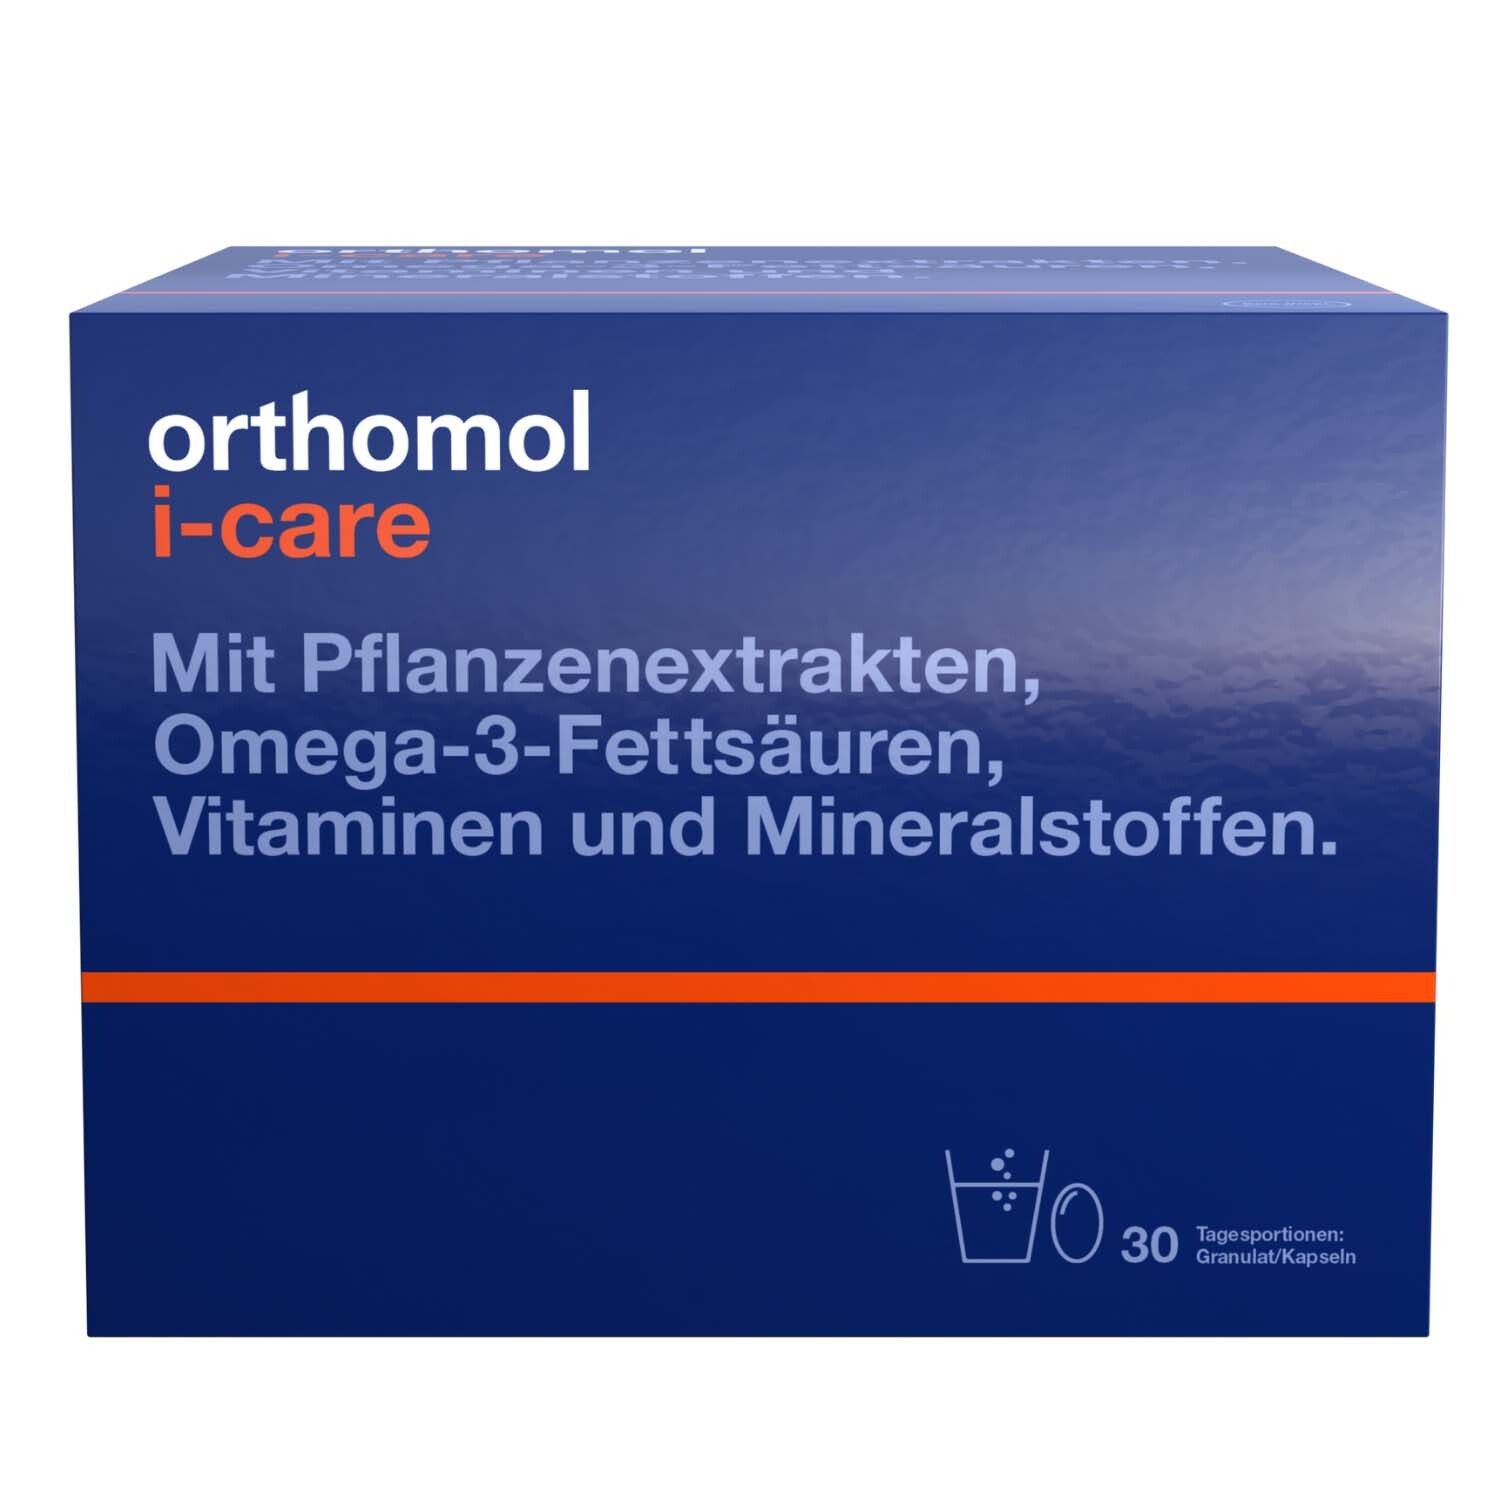 Orthomol i-CAre - Mikronährstoffbegleitung für Erwachsene - Vitamine, Mineralstoffe und Omega-3-Fettsäuren - Granulat/Ka